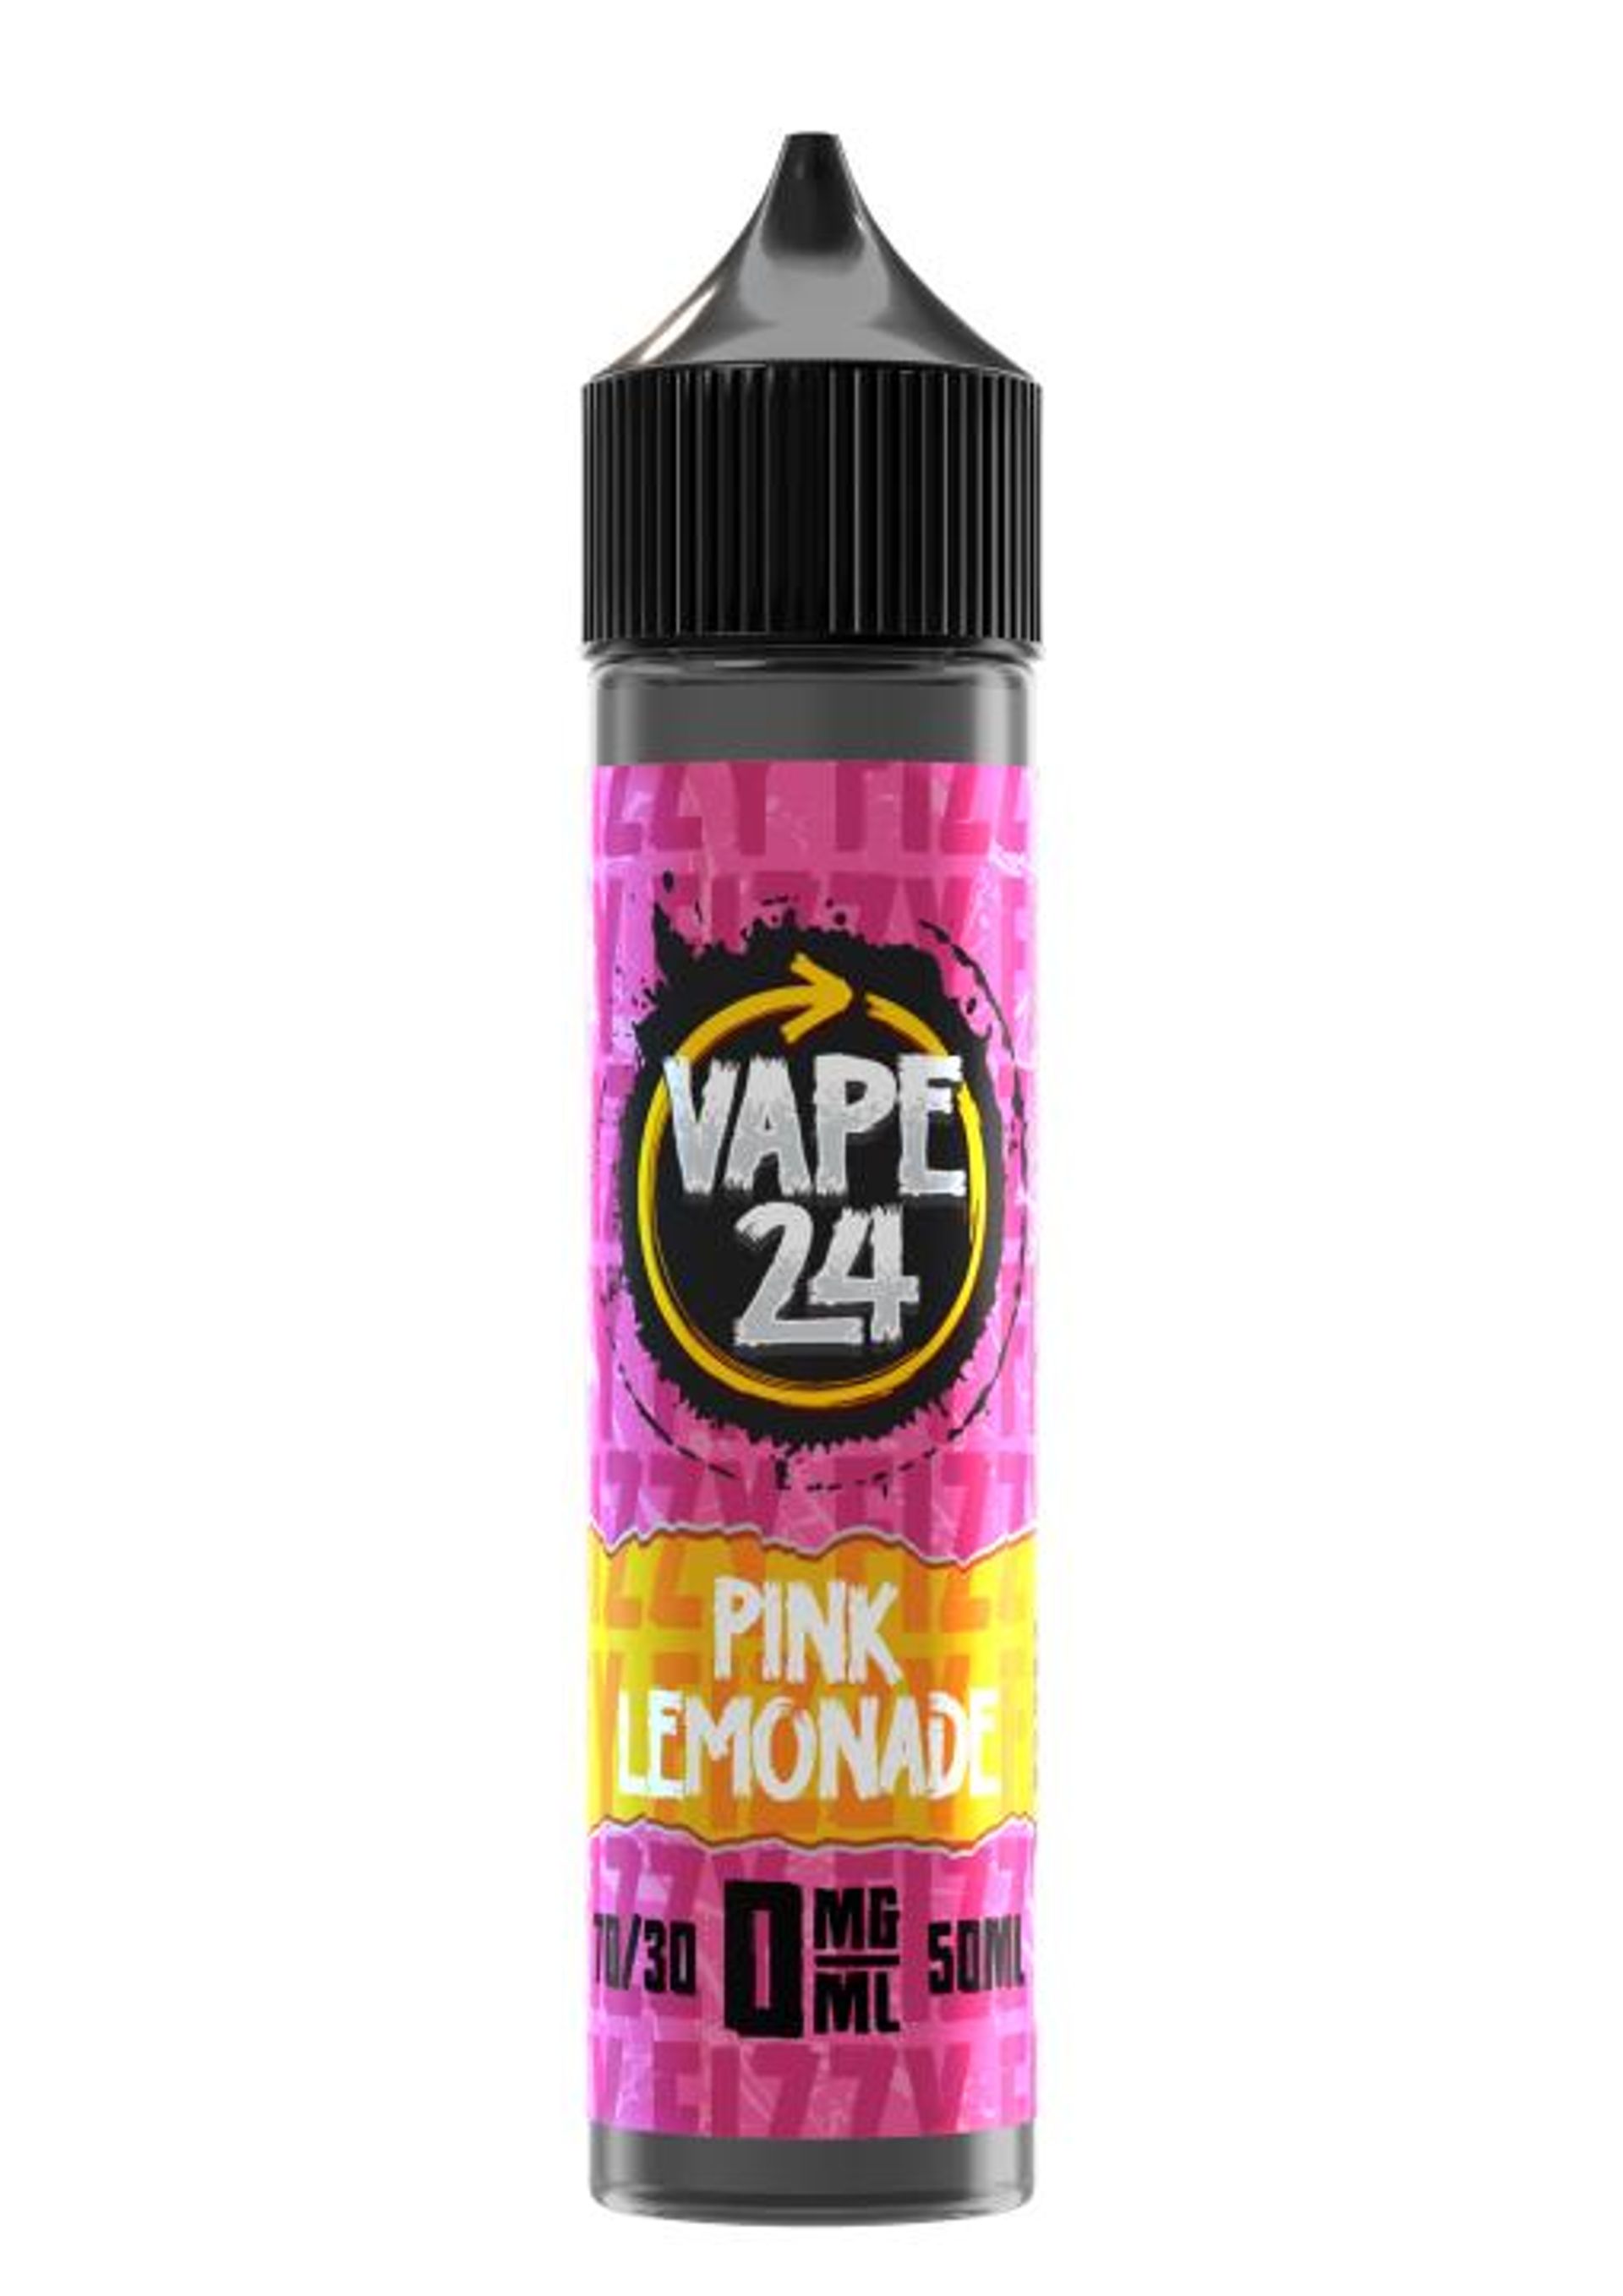 Image of Fizzy Pink Lemonade by Vape 24